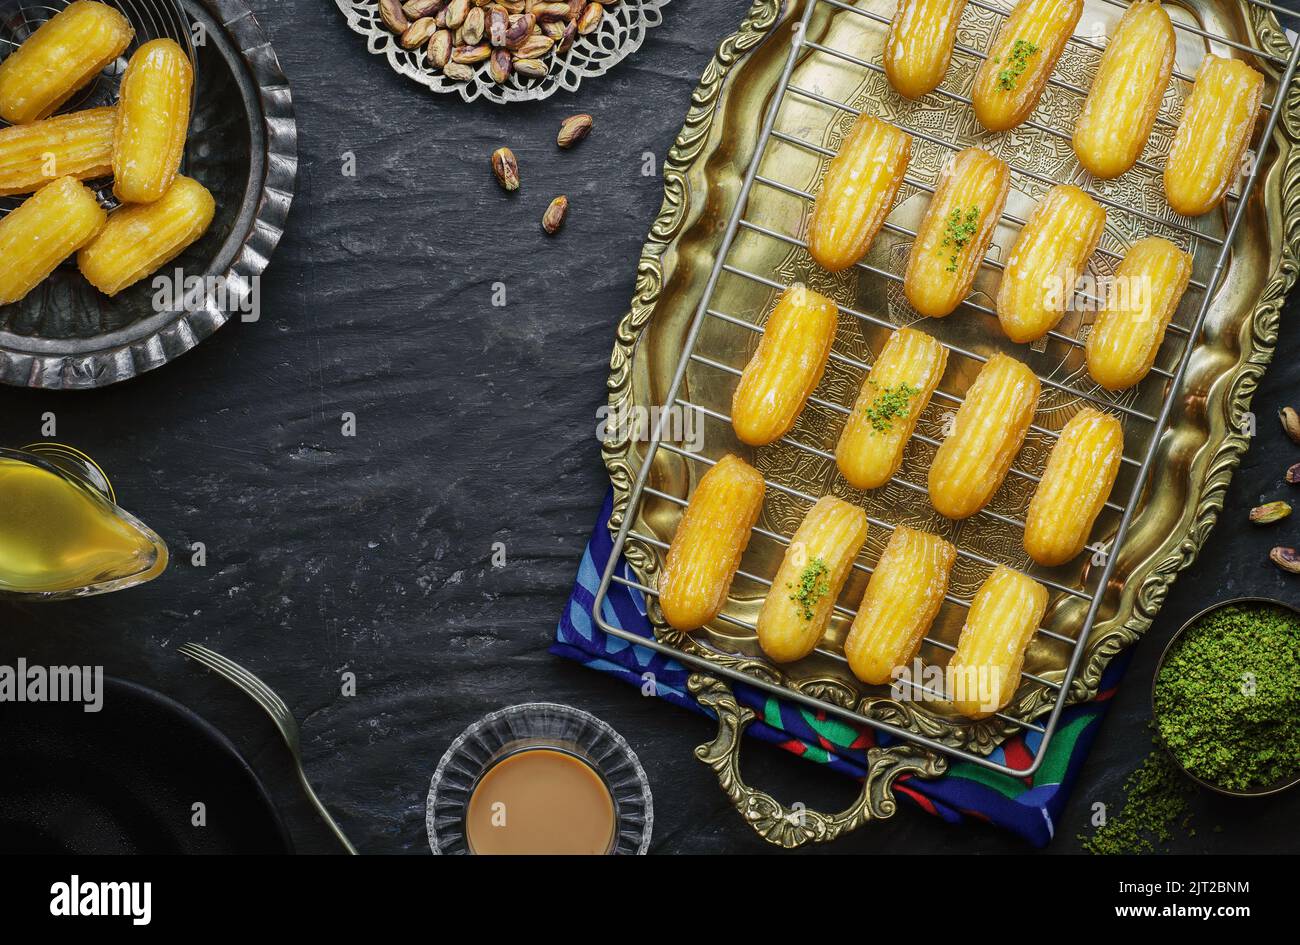 Arabic Cuisine: Middle Eastern Traditional dessert/Ramadan dessert Balah Al-Sham or Balah El Shaam served with pistachio and  honey syrup. Stock Photo